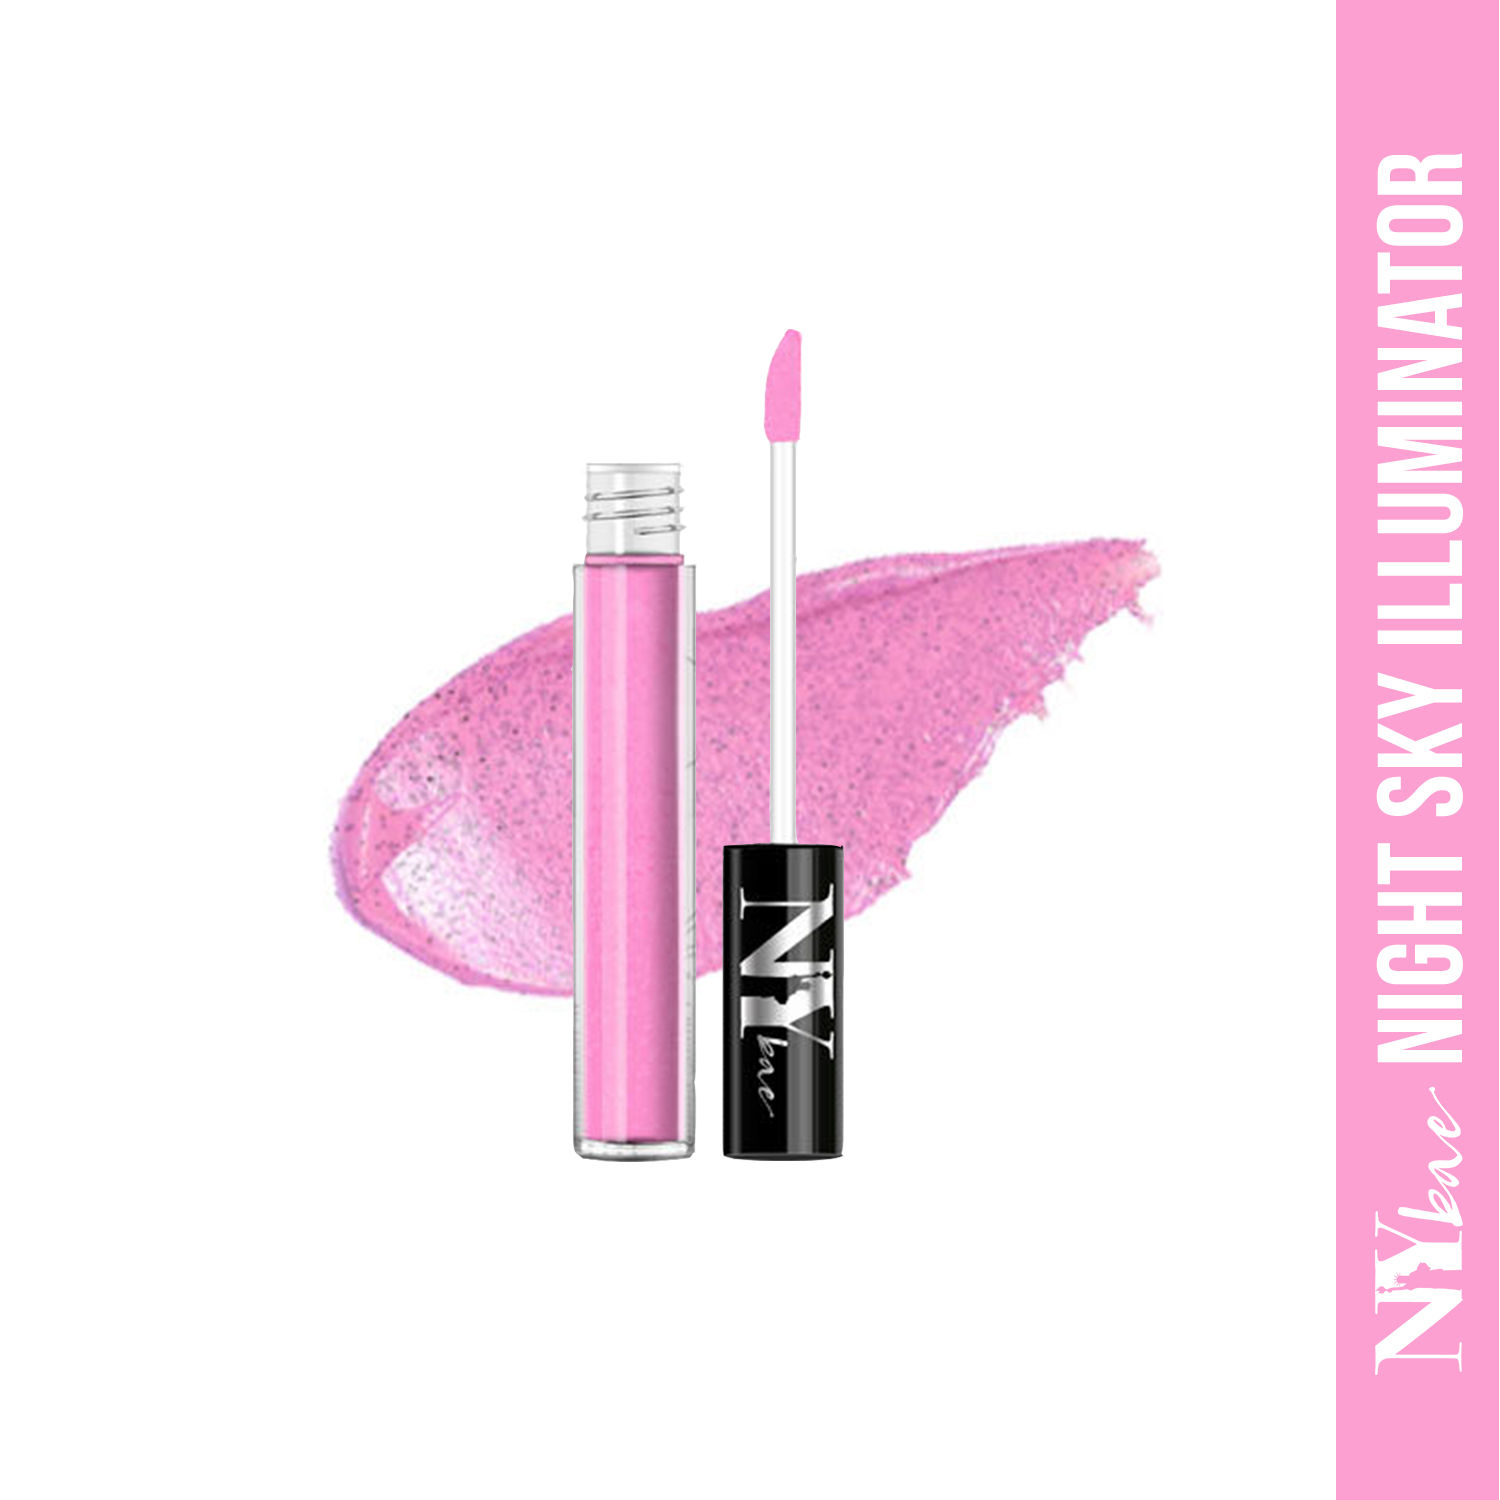 Buy NY Bae Liquid Illuminator, Pink - Governor's Kingdom Lighting 2 (3 ml) - Purplle